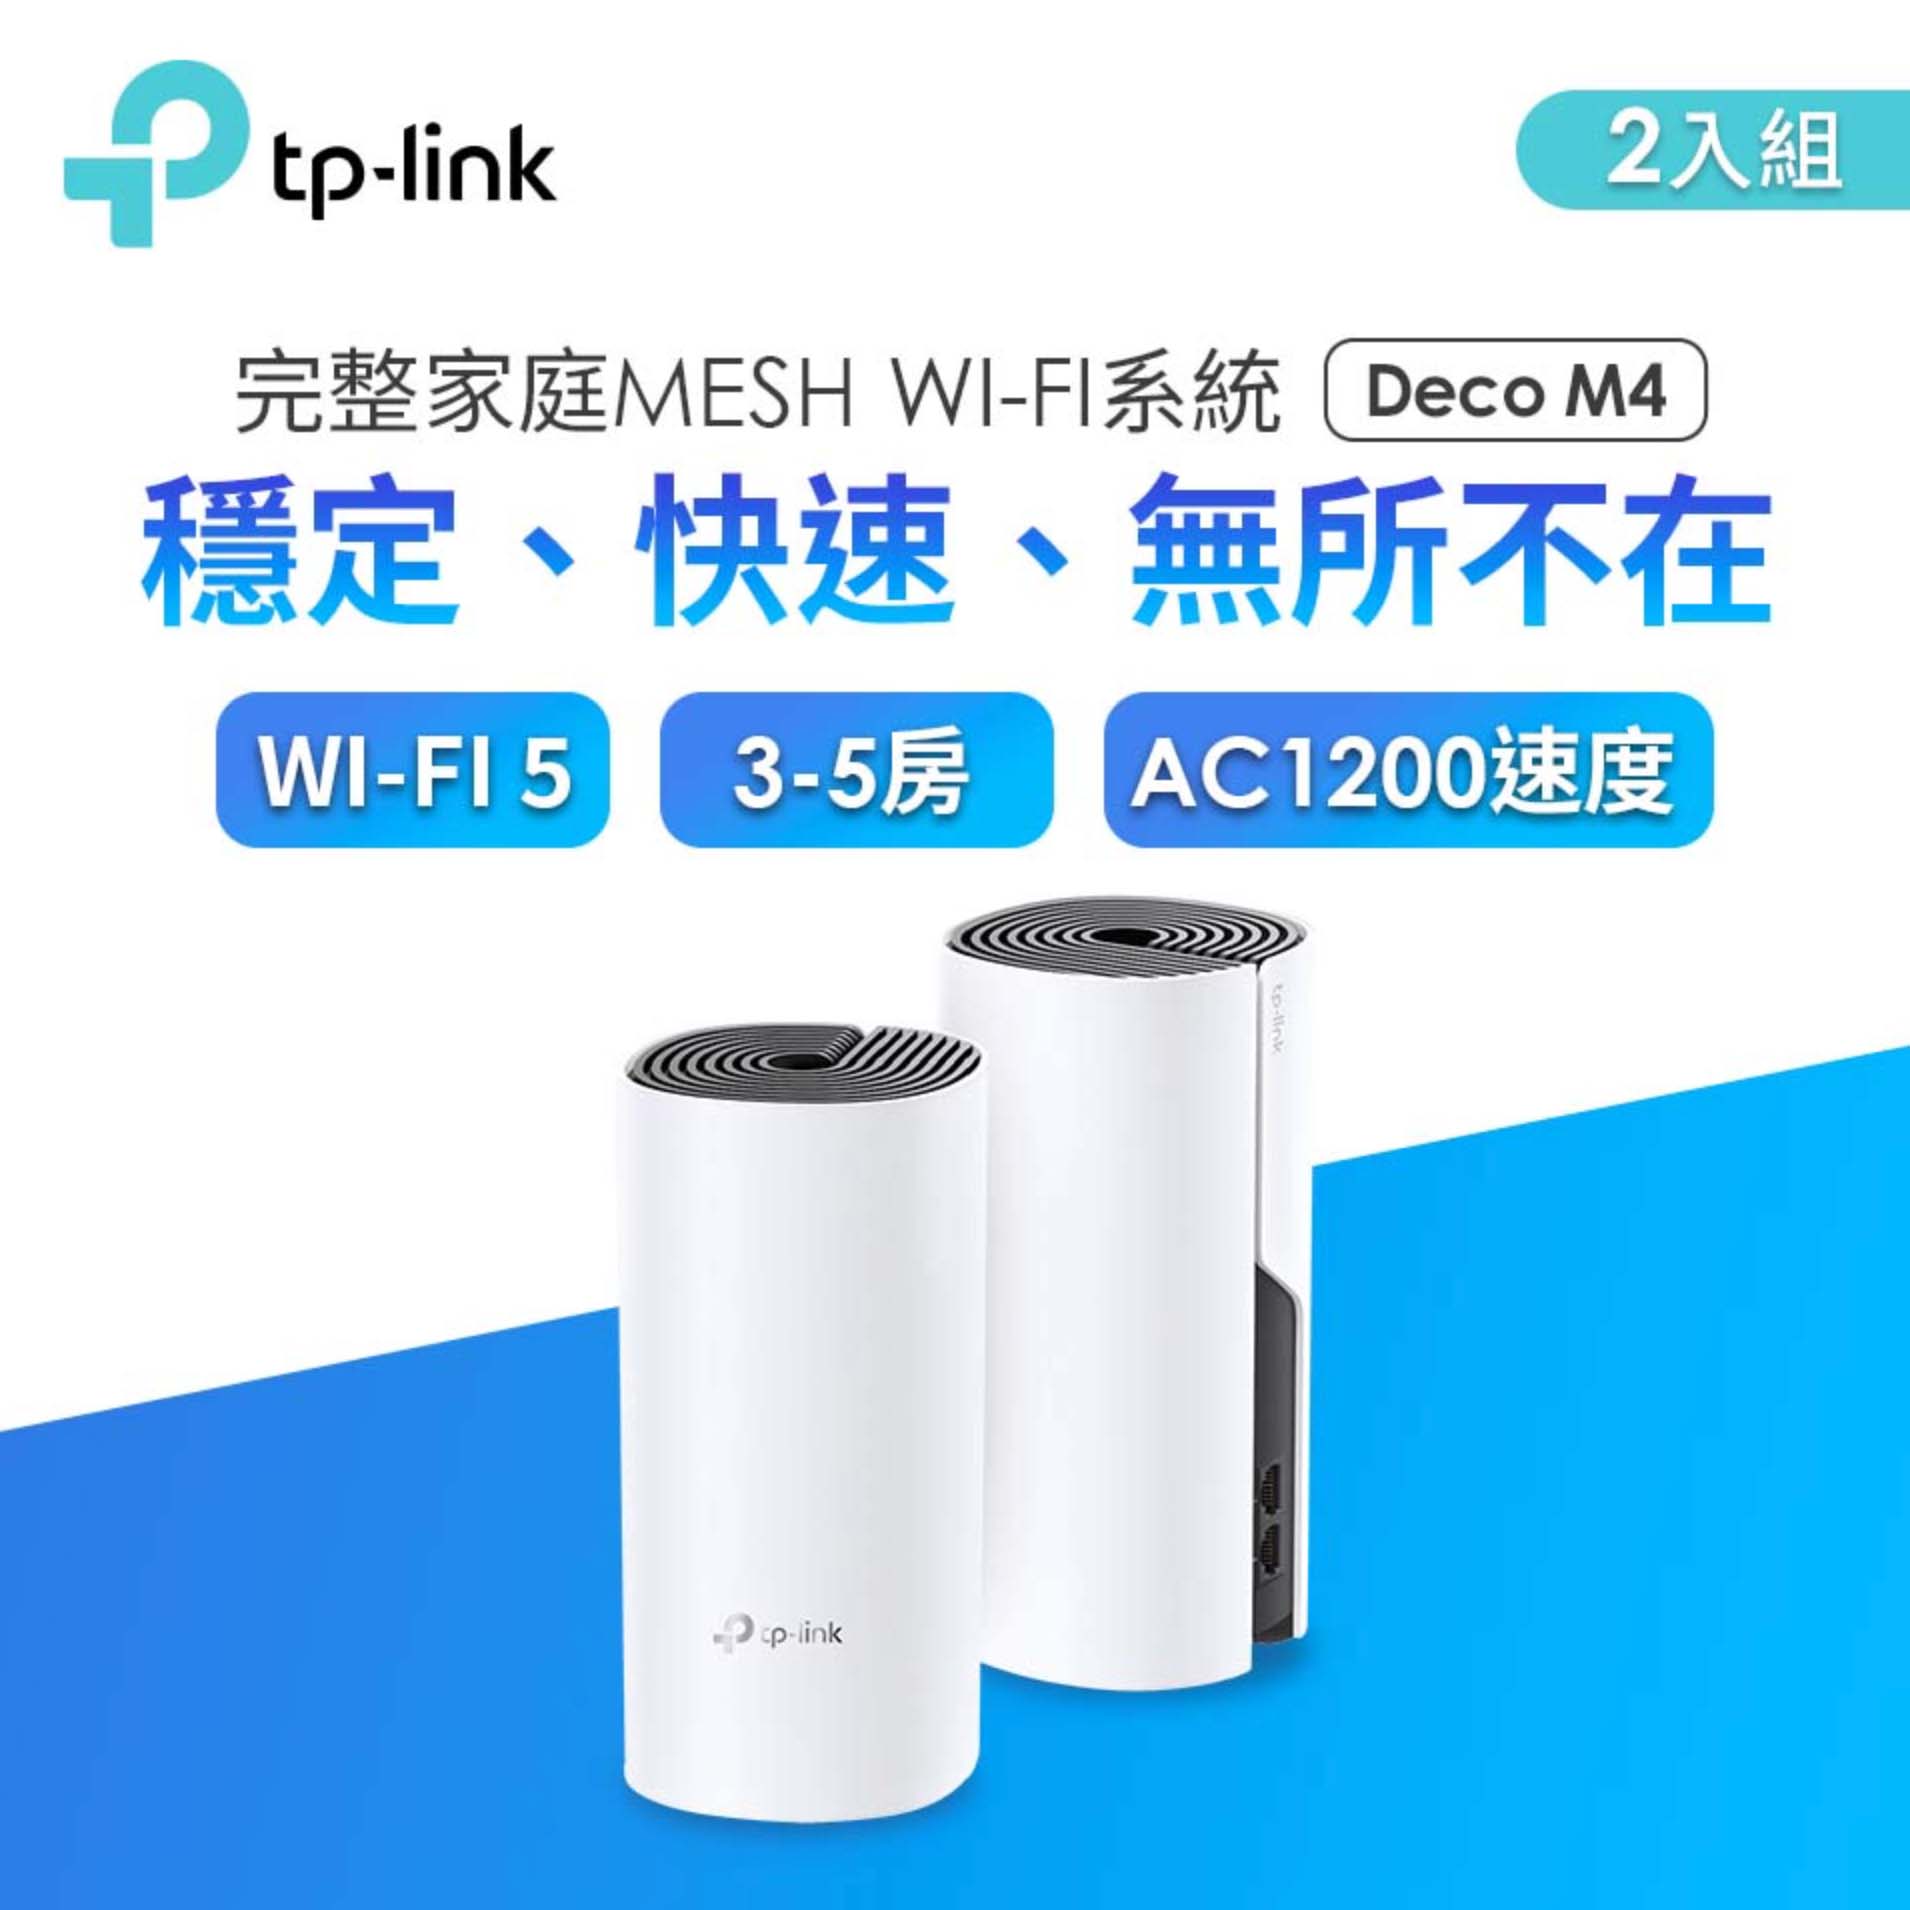 TP-Link Deco M4 AC1200 完整家庭 Mesh Wi-Fi 系統 (2入裝)